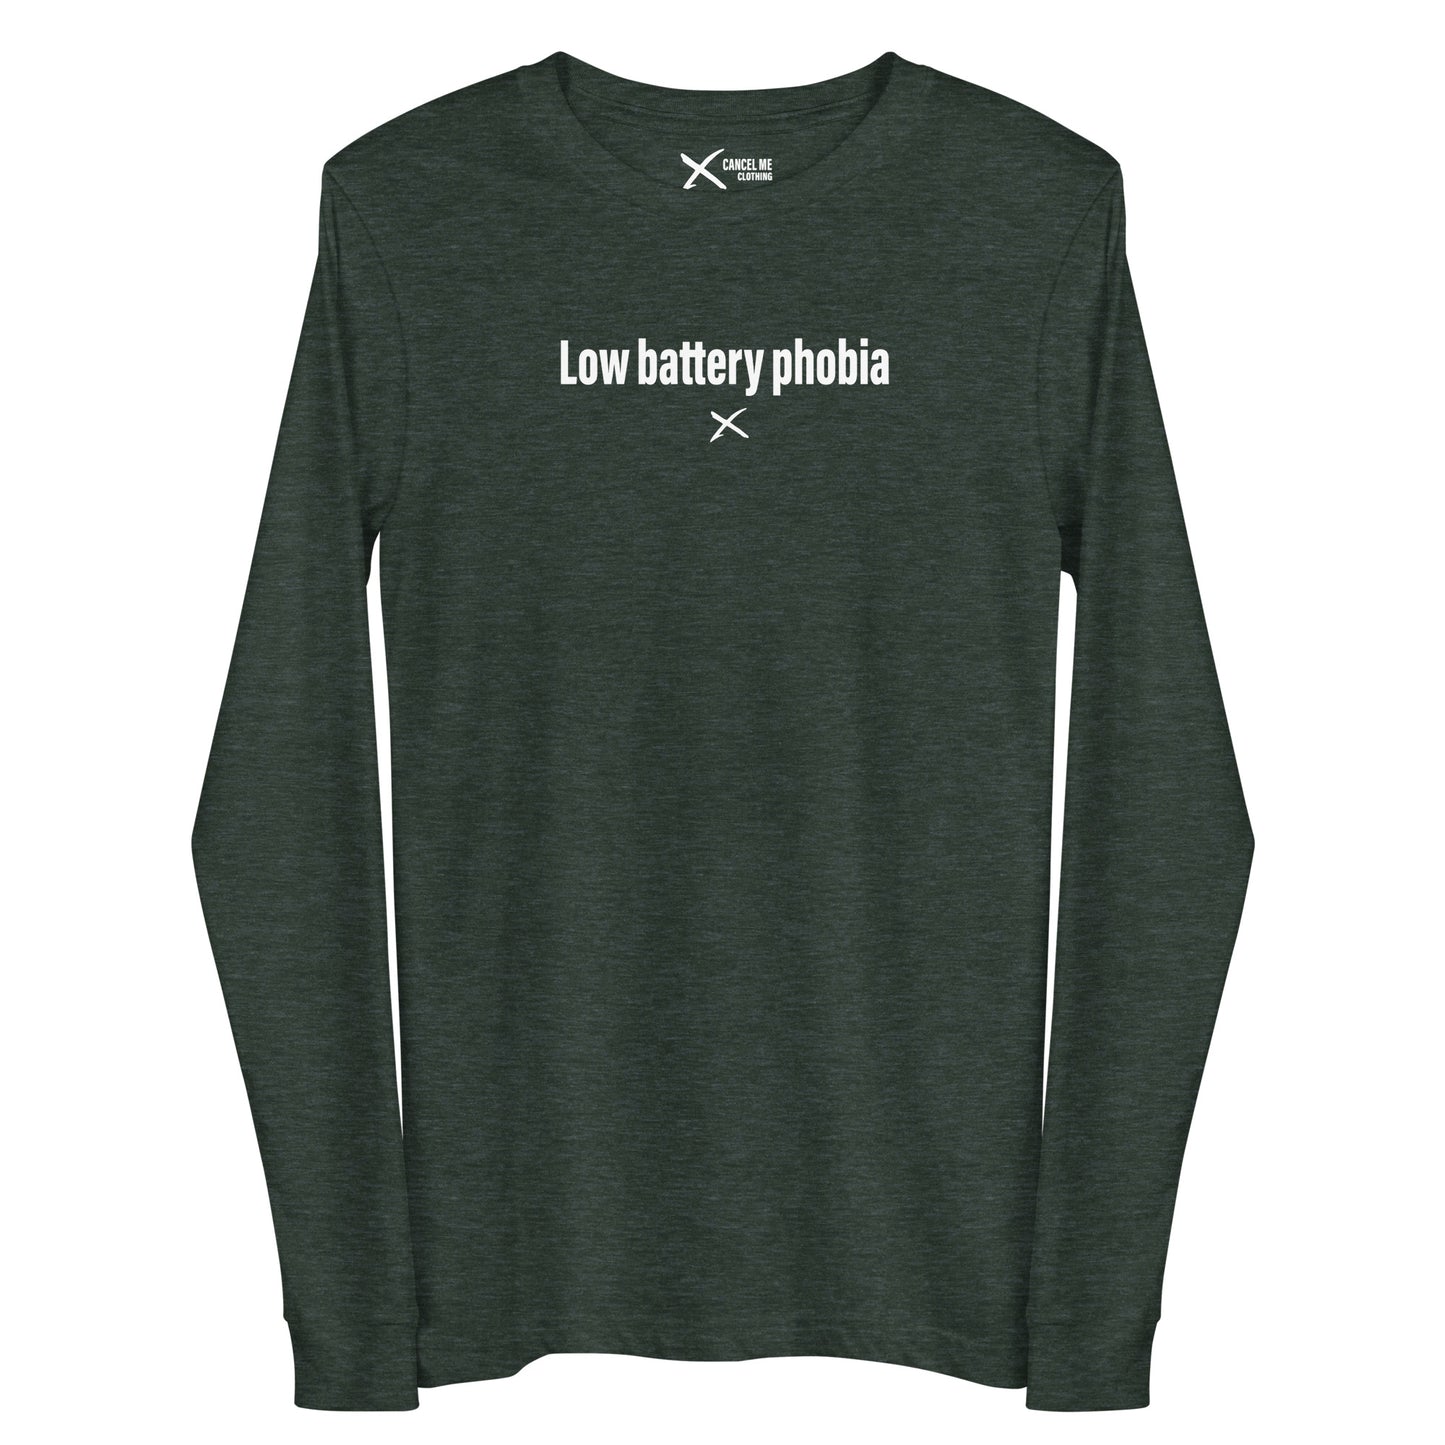 Low battery phobia - Longsleeve